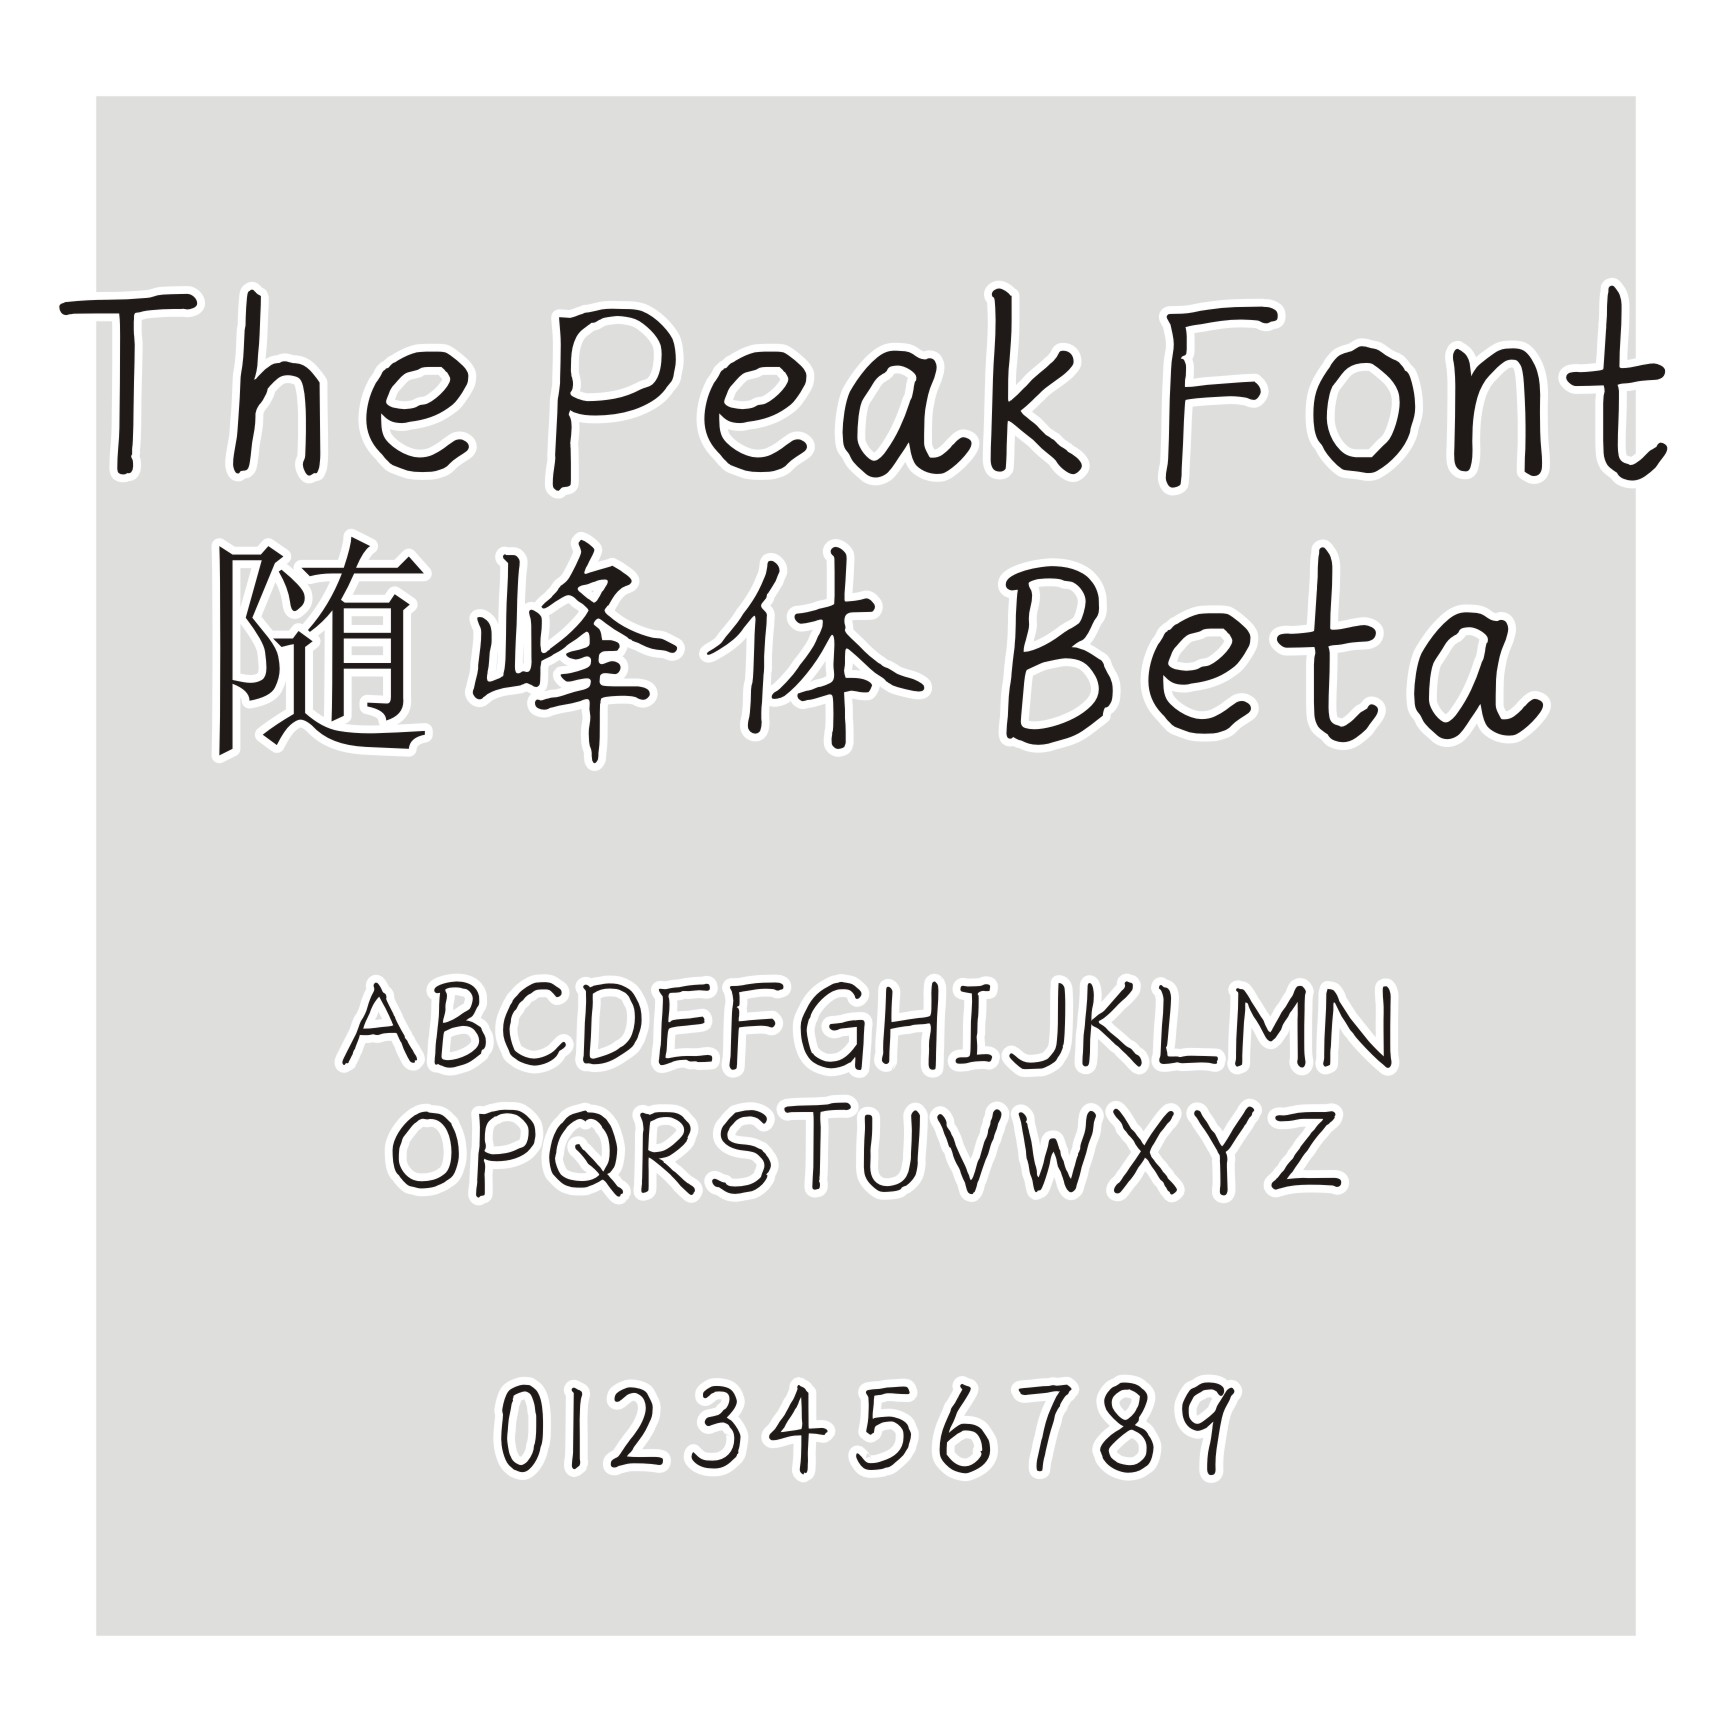 The Peak Font 随峰体 Beta